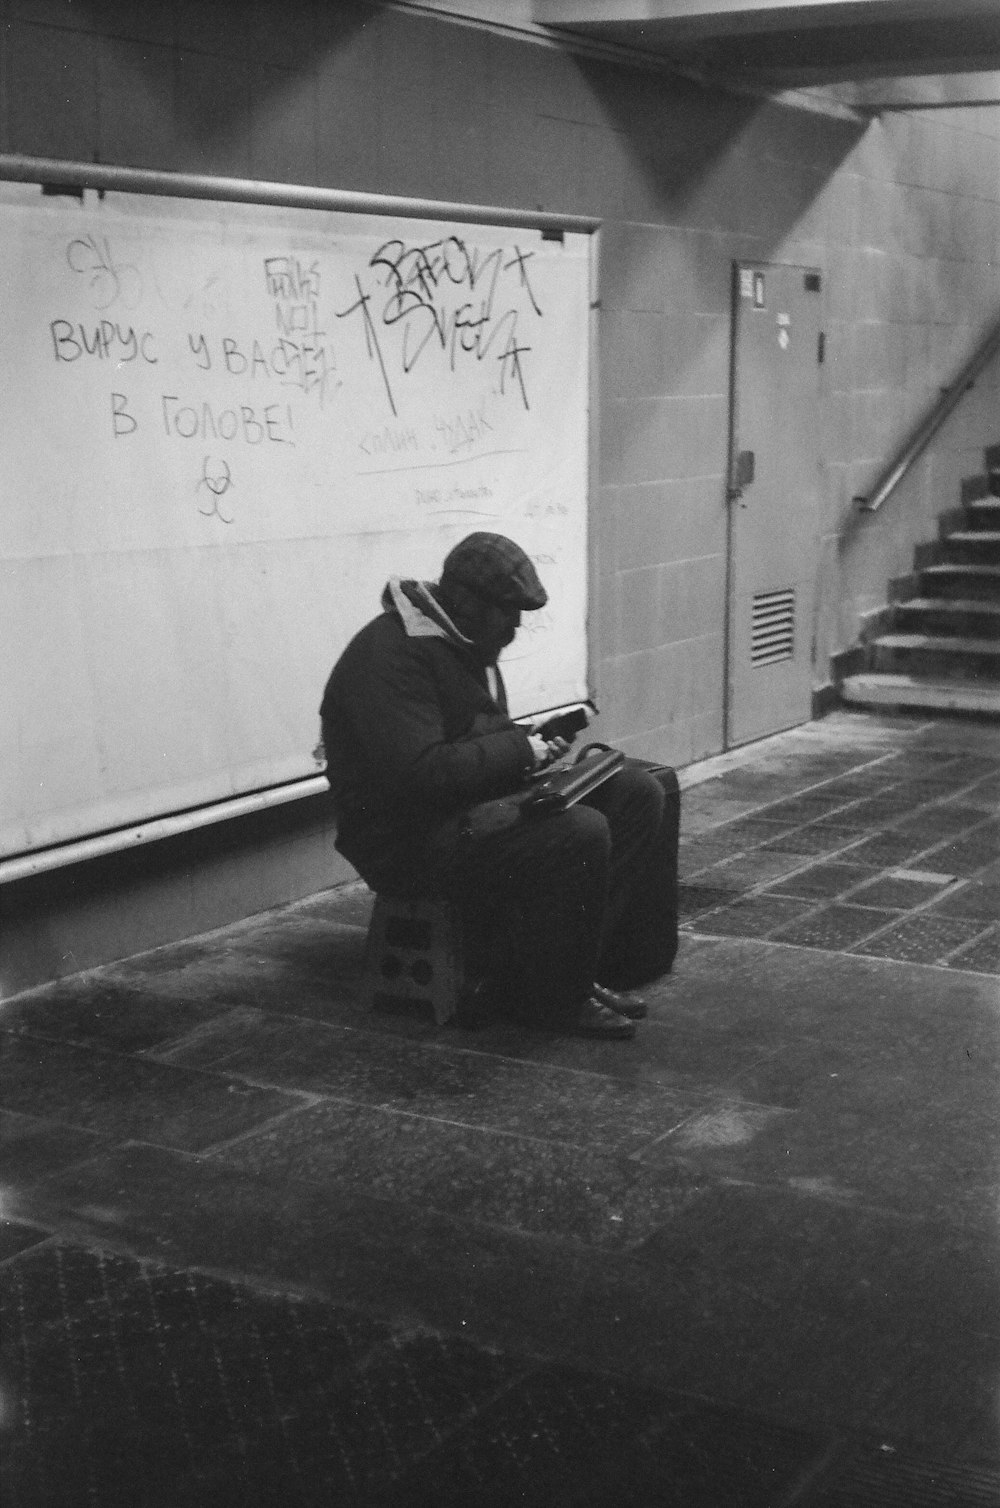 man in black jacket sitting on bench